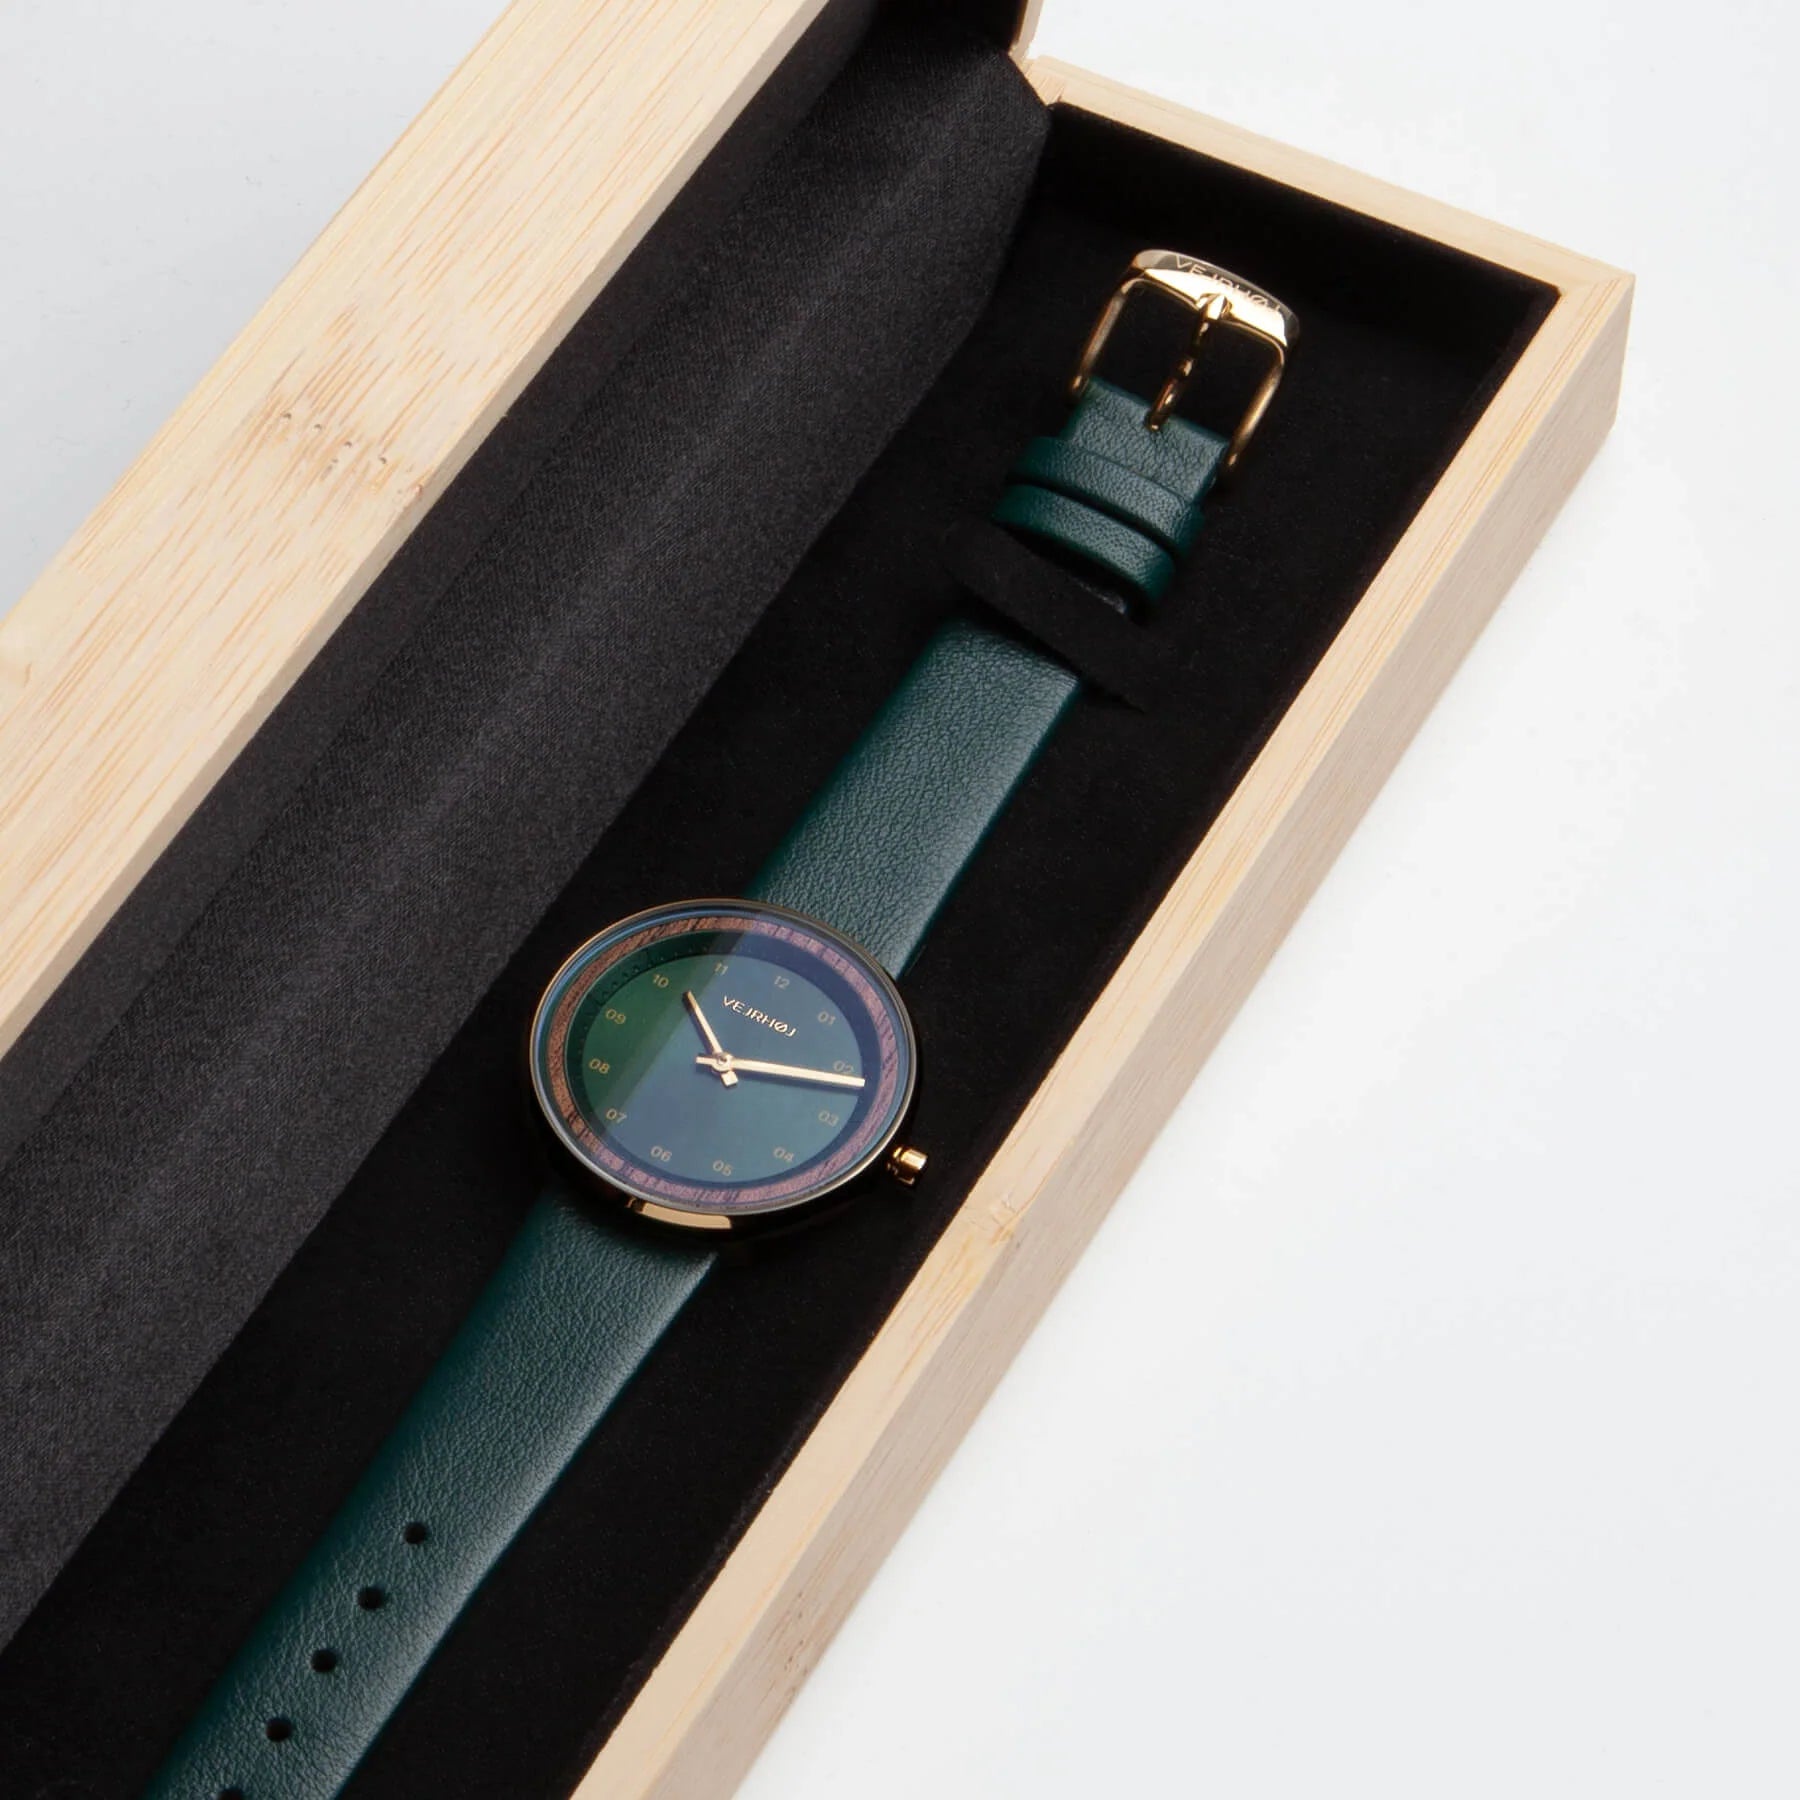 VEJRHØJ Petite emerald グリーン色の腕時計が綺麗に作った竹箱に中に乗っている